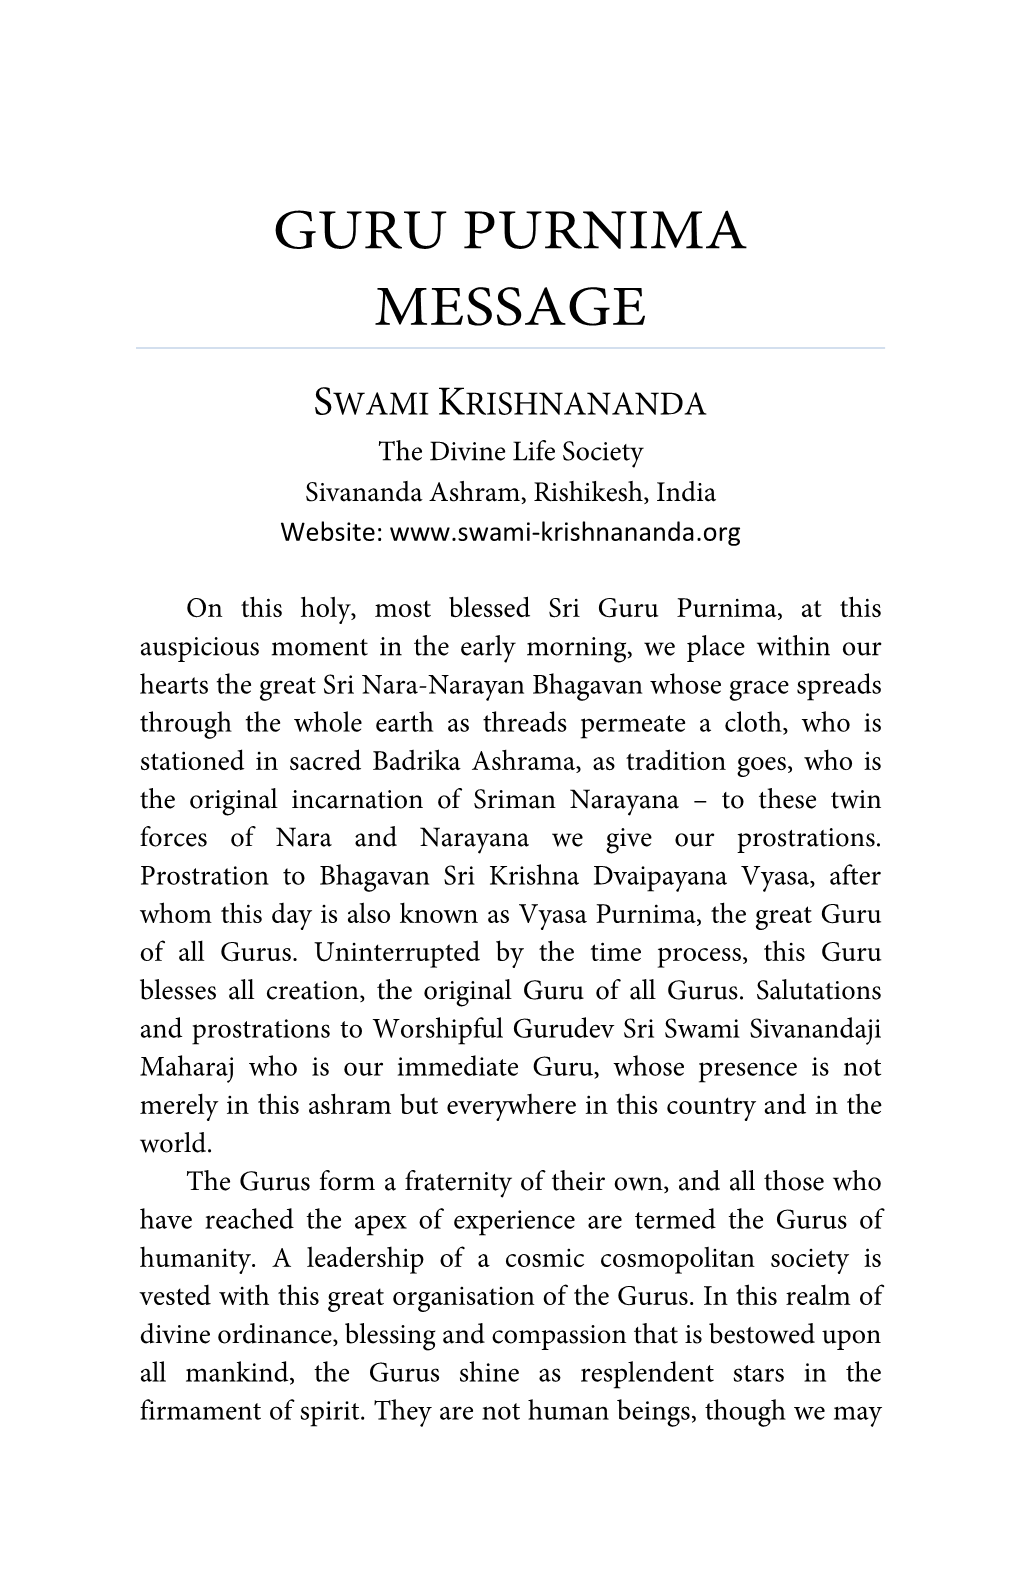 Guru Purnima Message